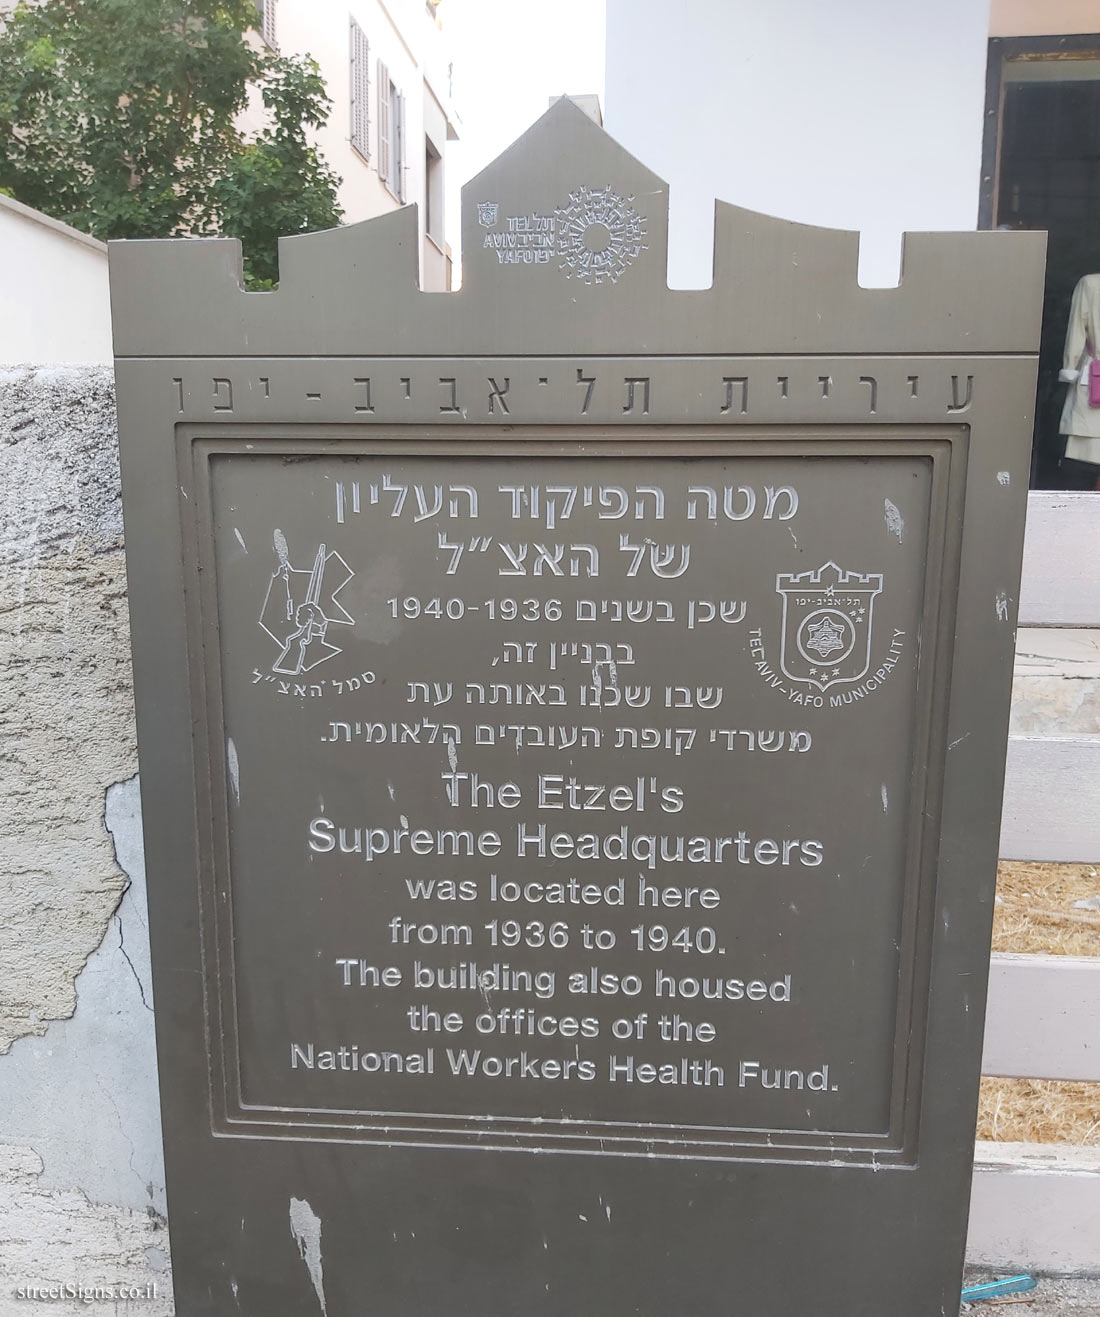 The Etzel’s Supreme Headquarters - Commemoration of Underground Movements in Tel Aviv